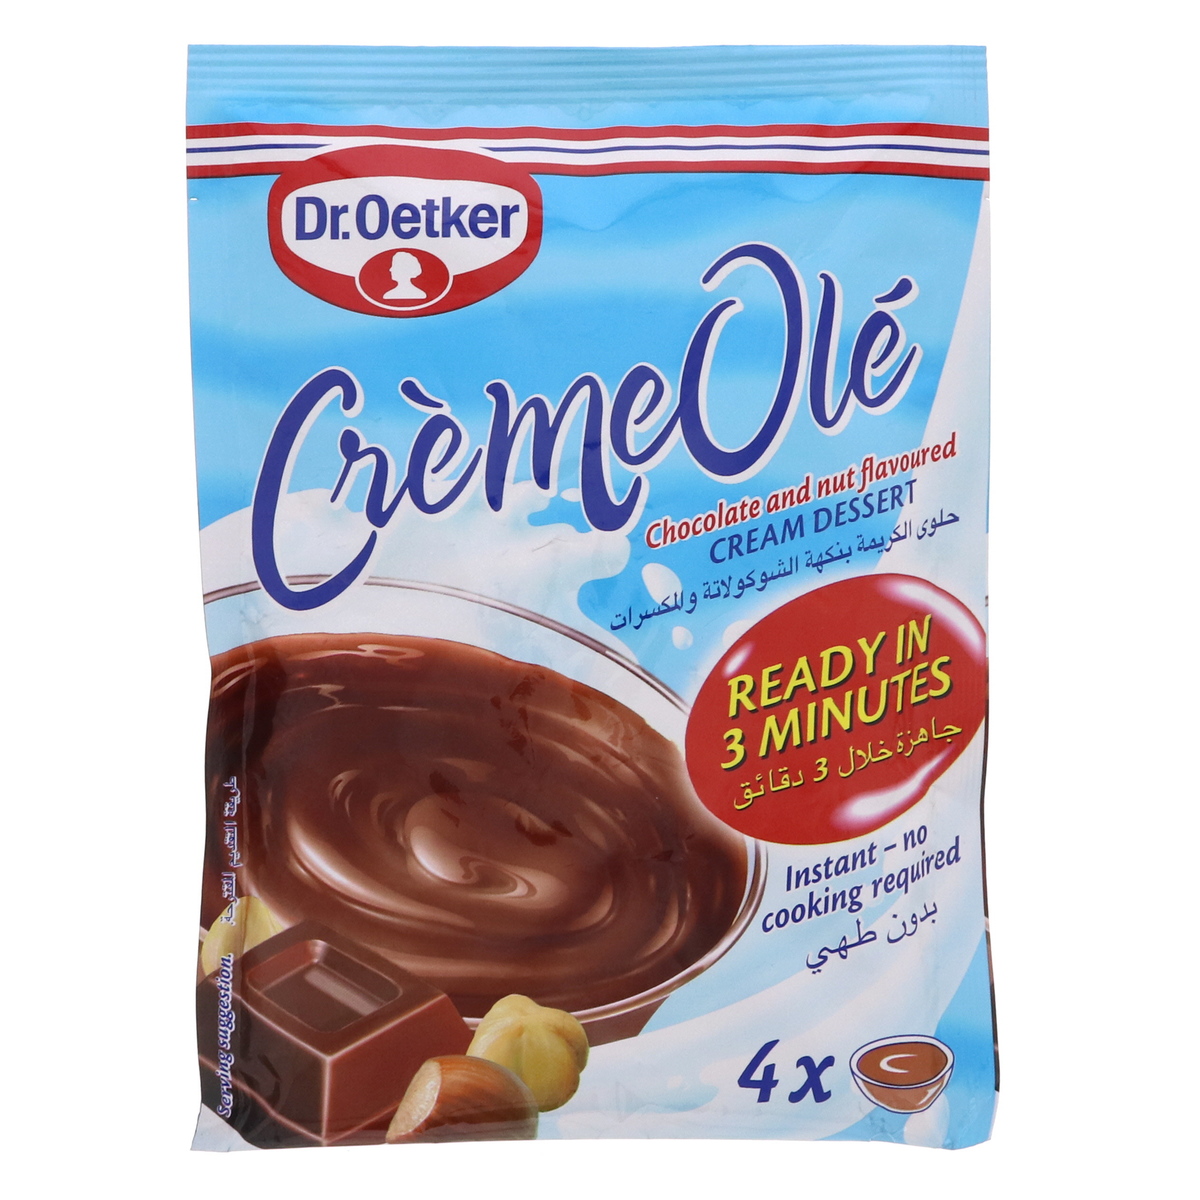 Dr. Oetker CremeOle Chocolate And Nut Flavoured Cream Dessert 125g